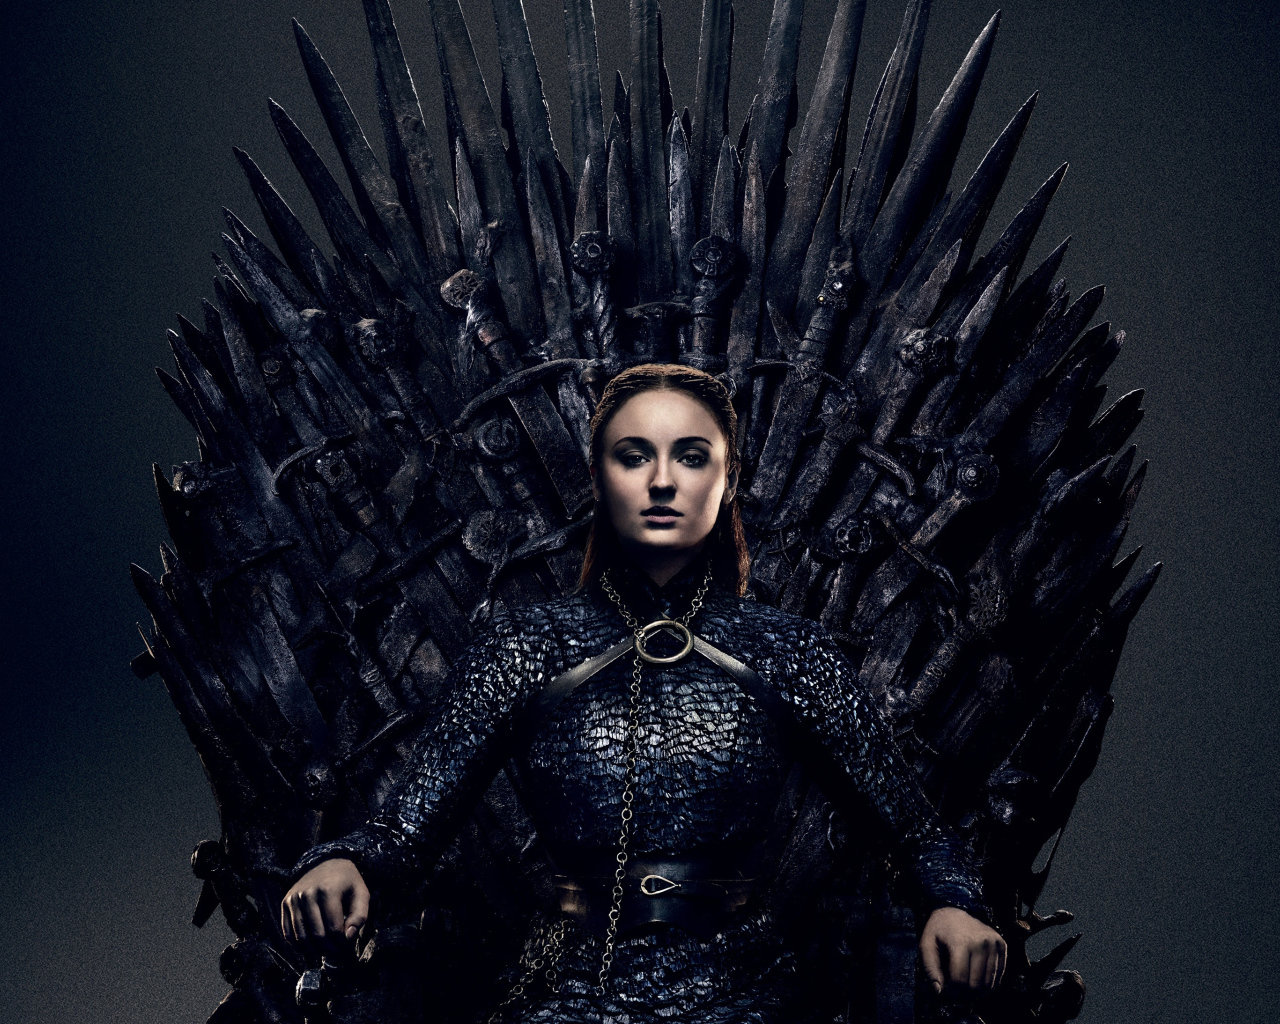 Sansa Stark character on the throne film Game of Thrones Season 8